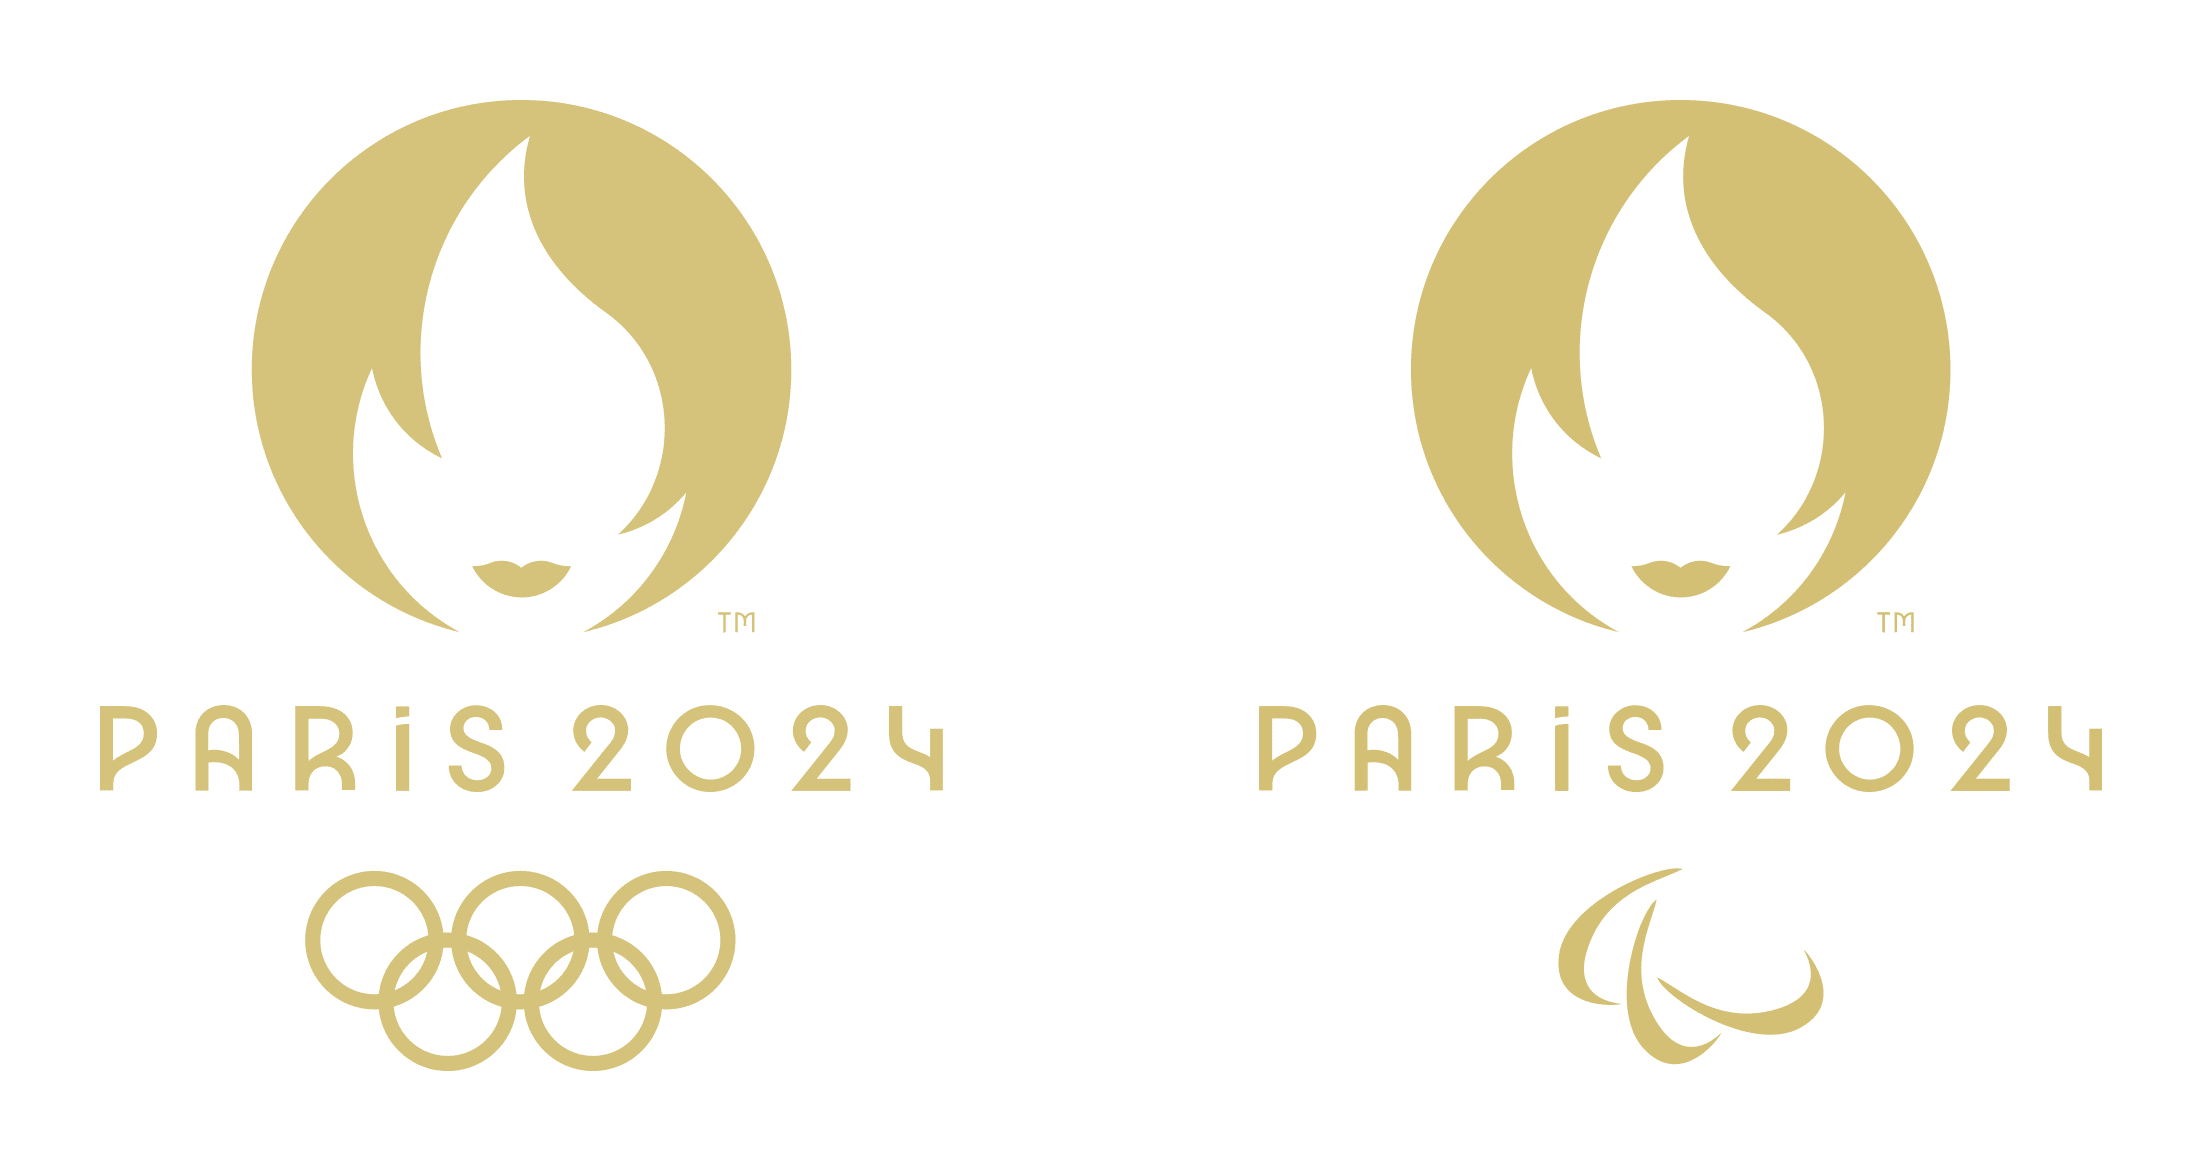 Jogo olímpico paris 2024 fundo preto